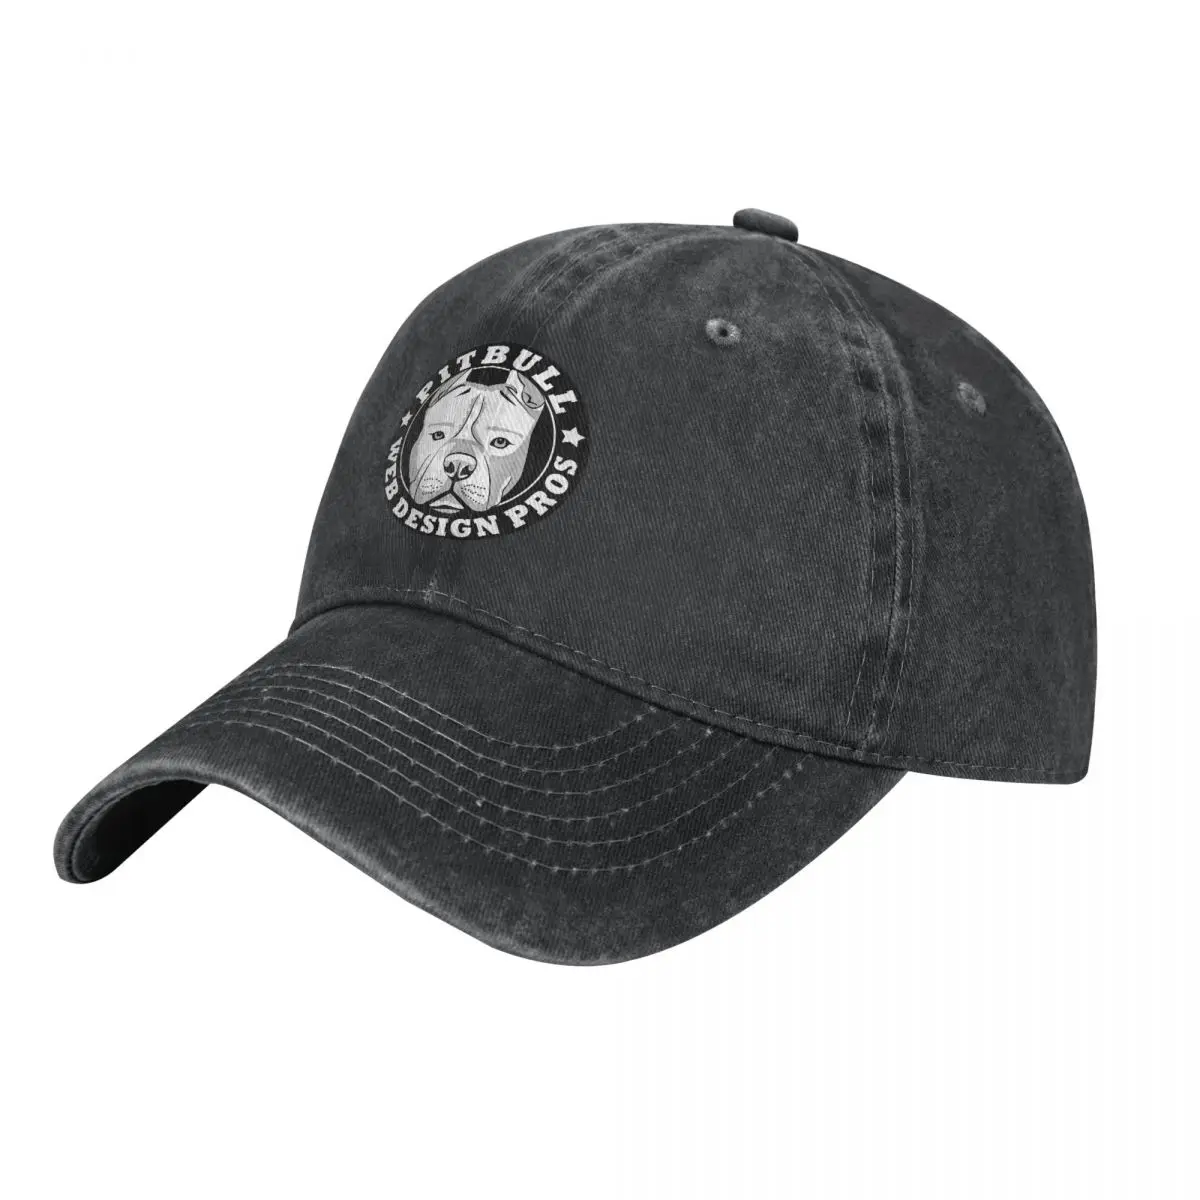 Bully Pitbull Loyalty Baseball Caps Hats Web Design Pros Cowboy Hat For Man Peaked Cap Drama Caps